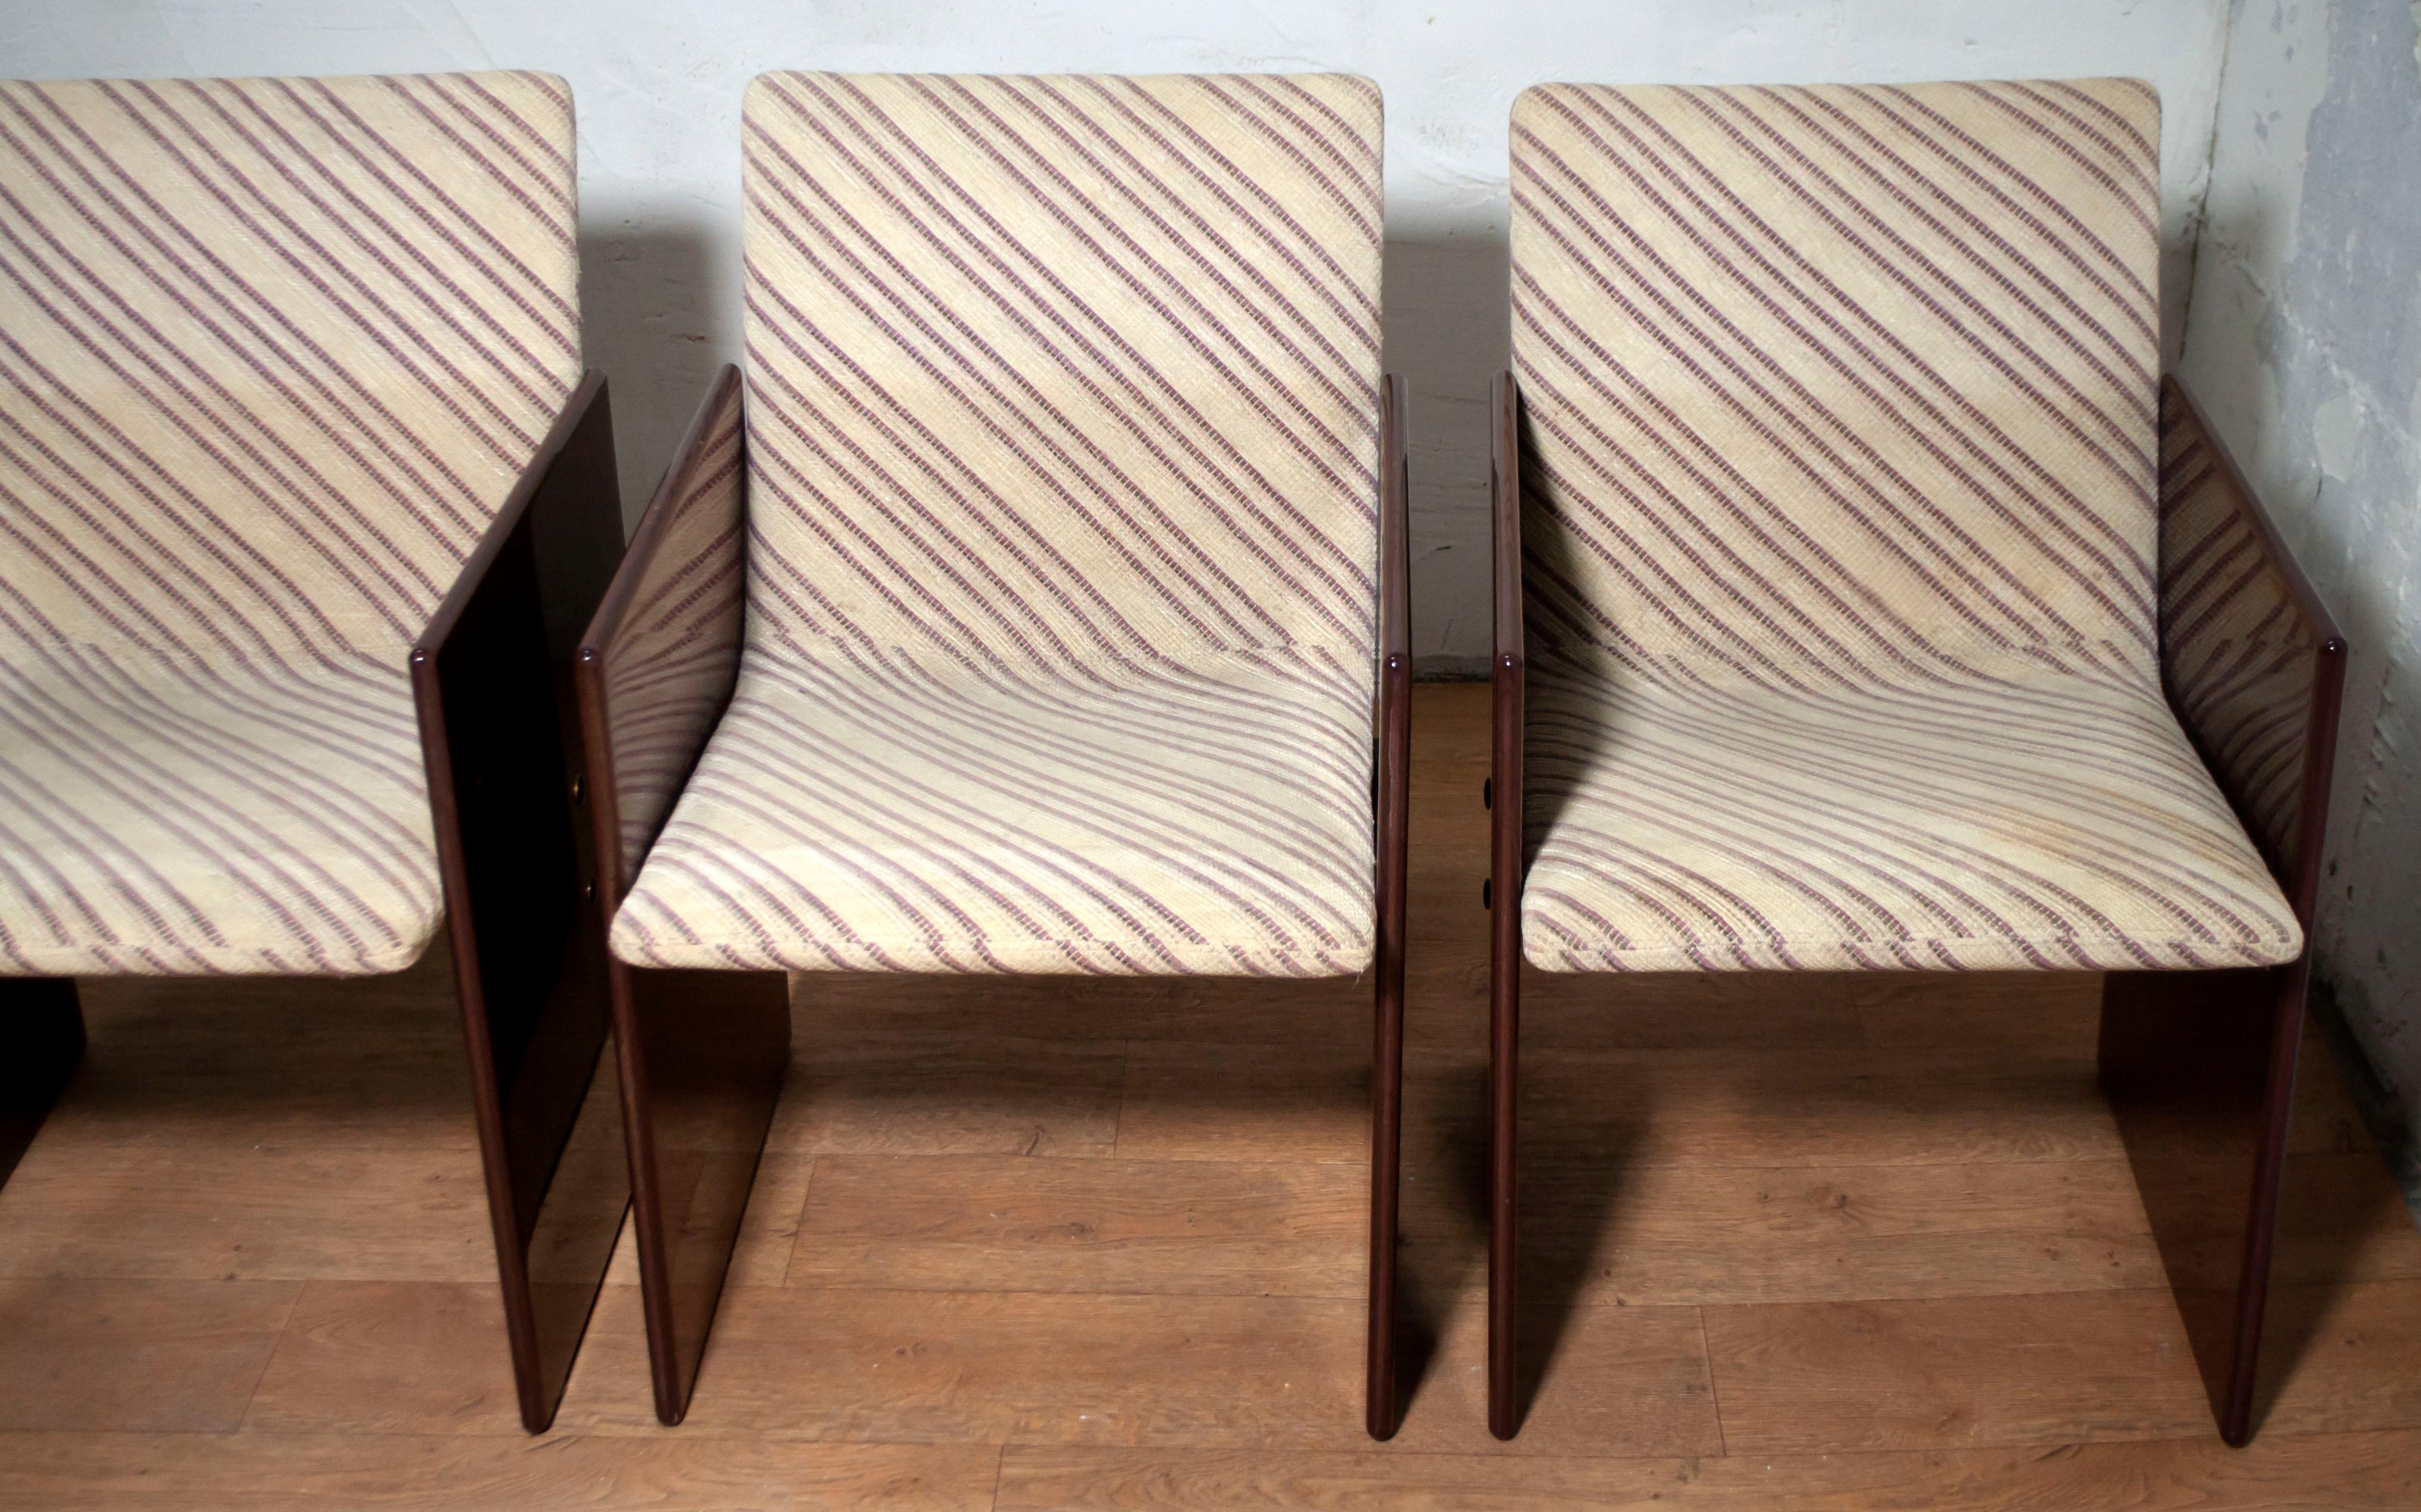 Modern Giovanni Offredi Italian Dining Chairs Missoni Fabric by Saporiti 1970 Walnut